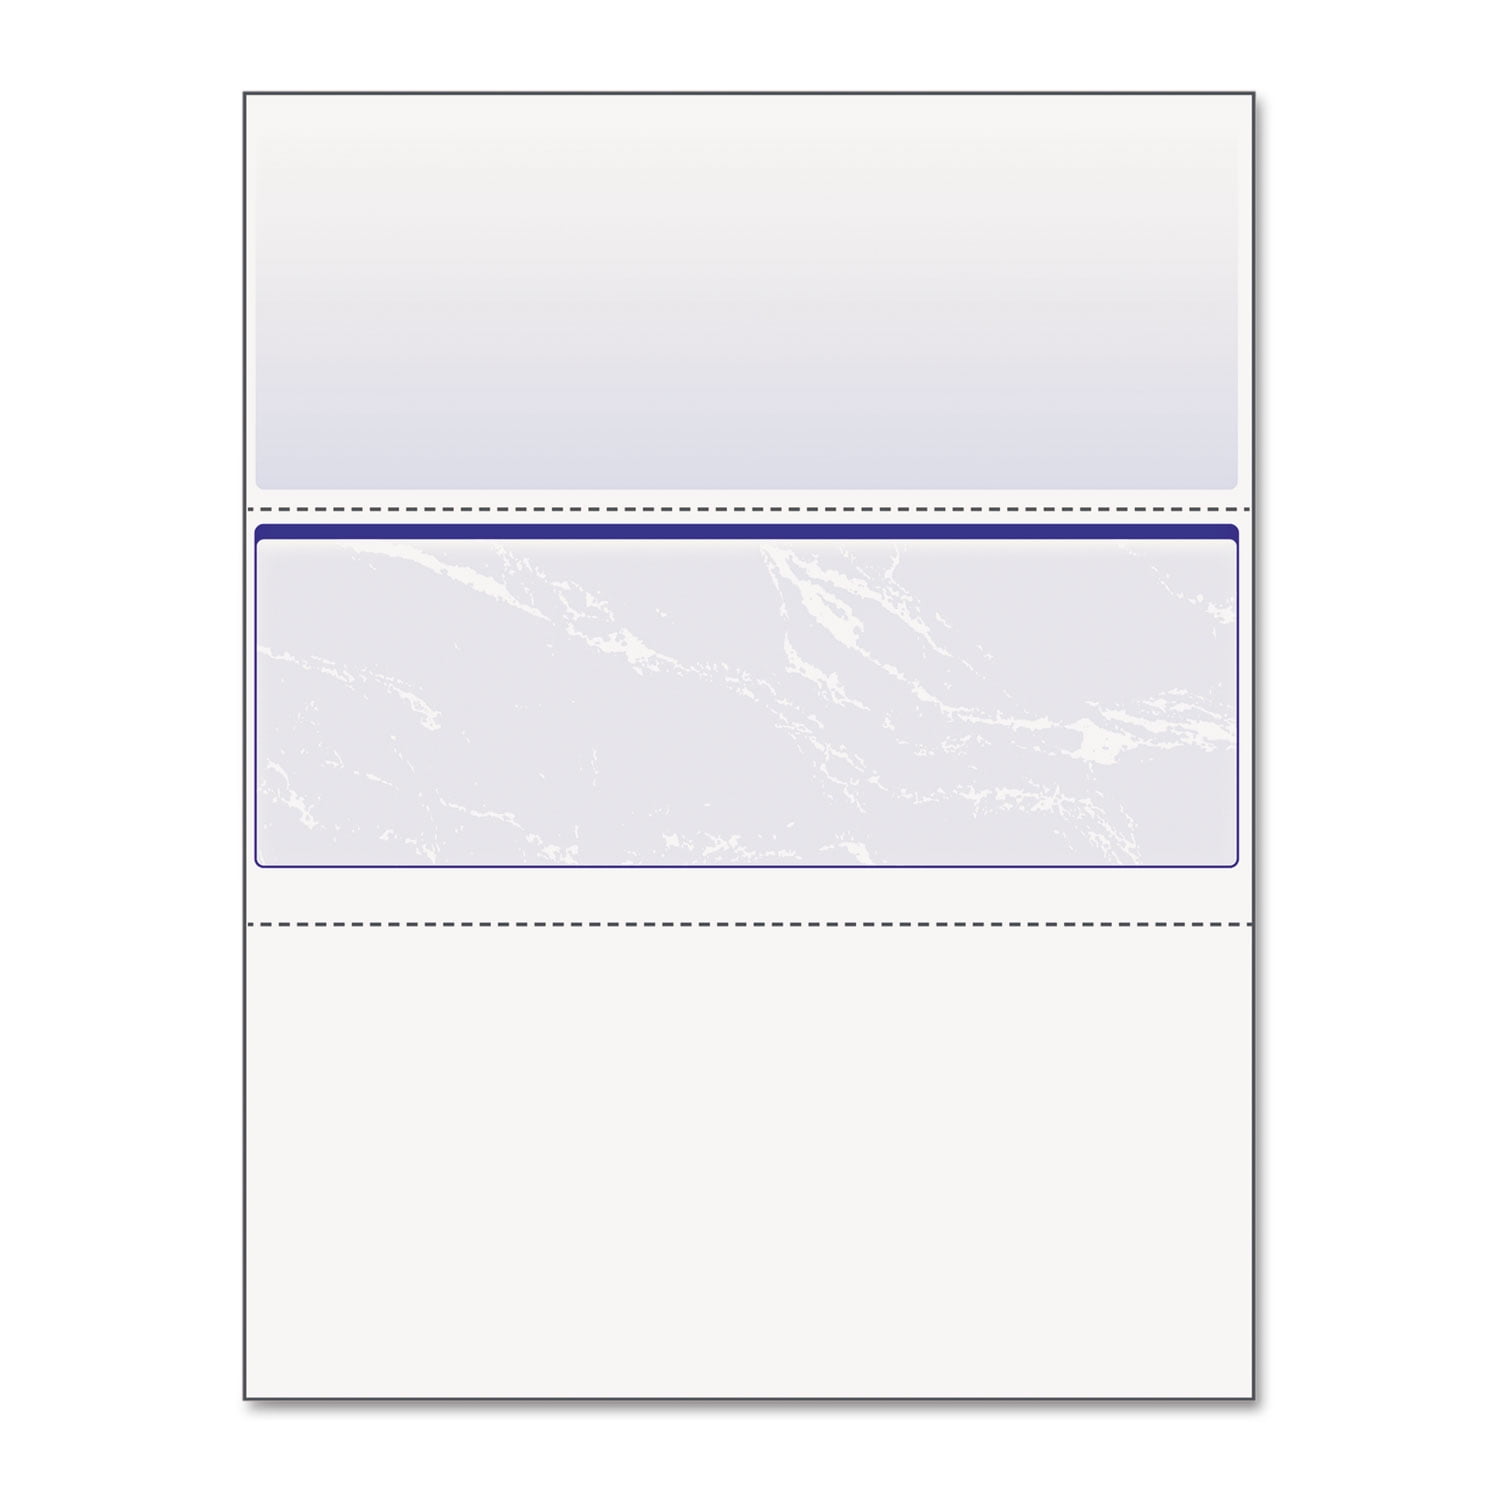 Williamsburg 8.5 x 11 24/60 White Paper 500 Sheets/Ream